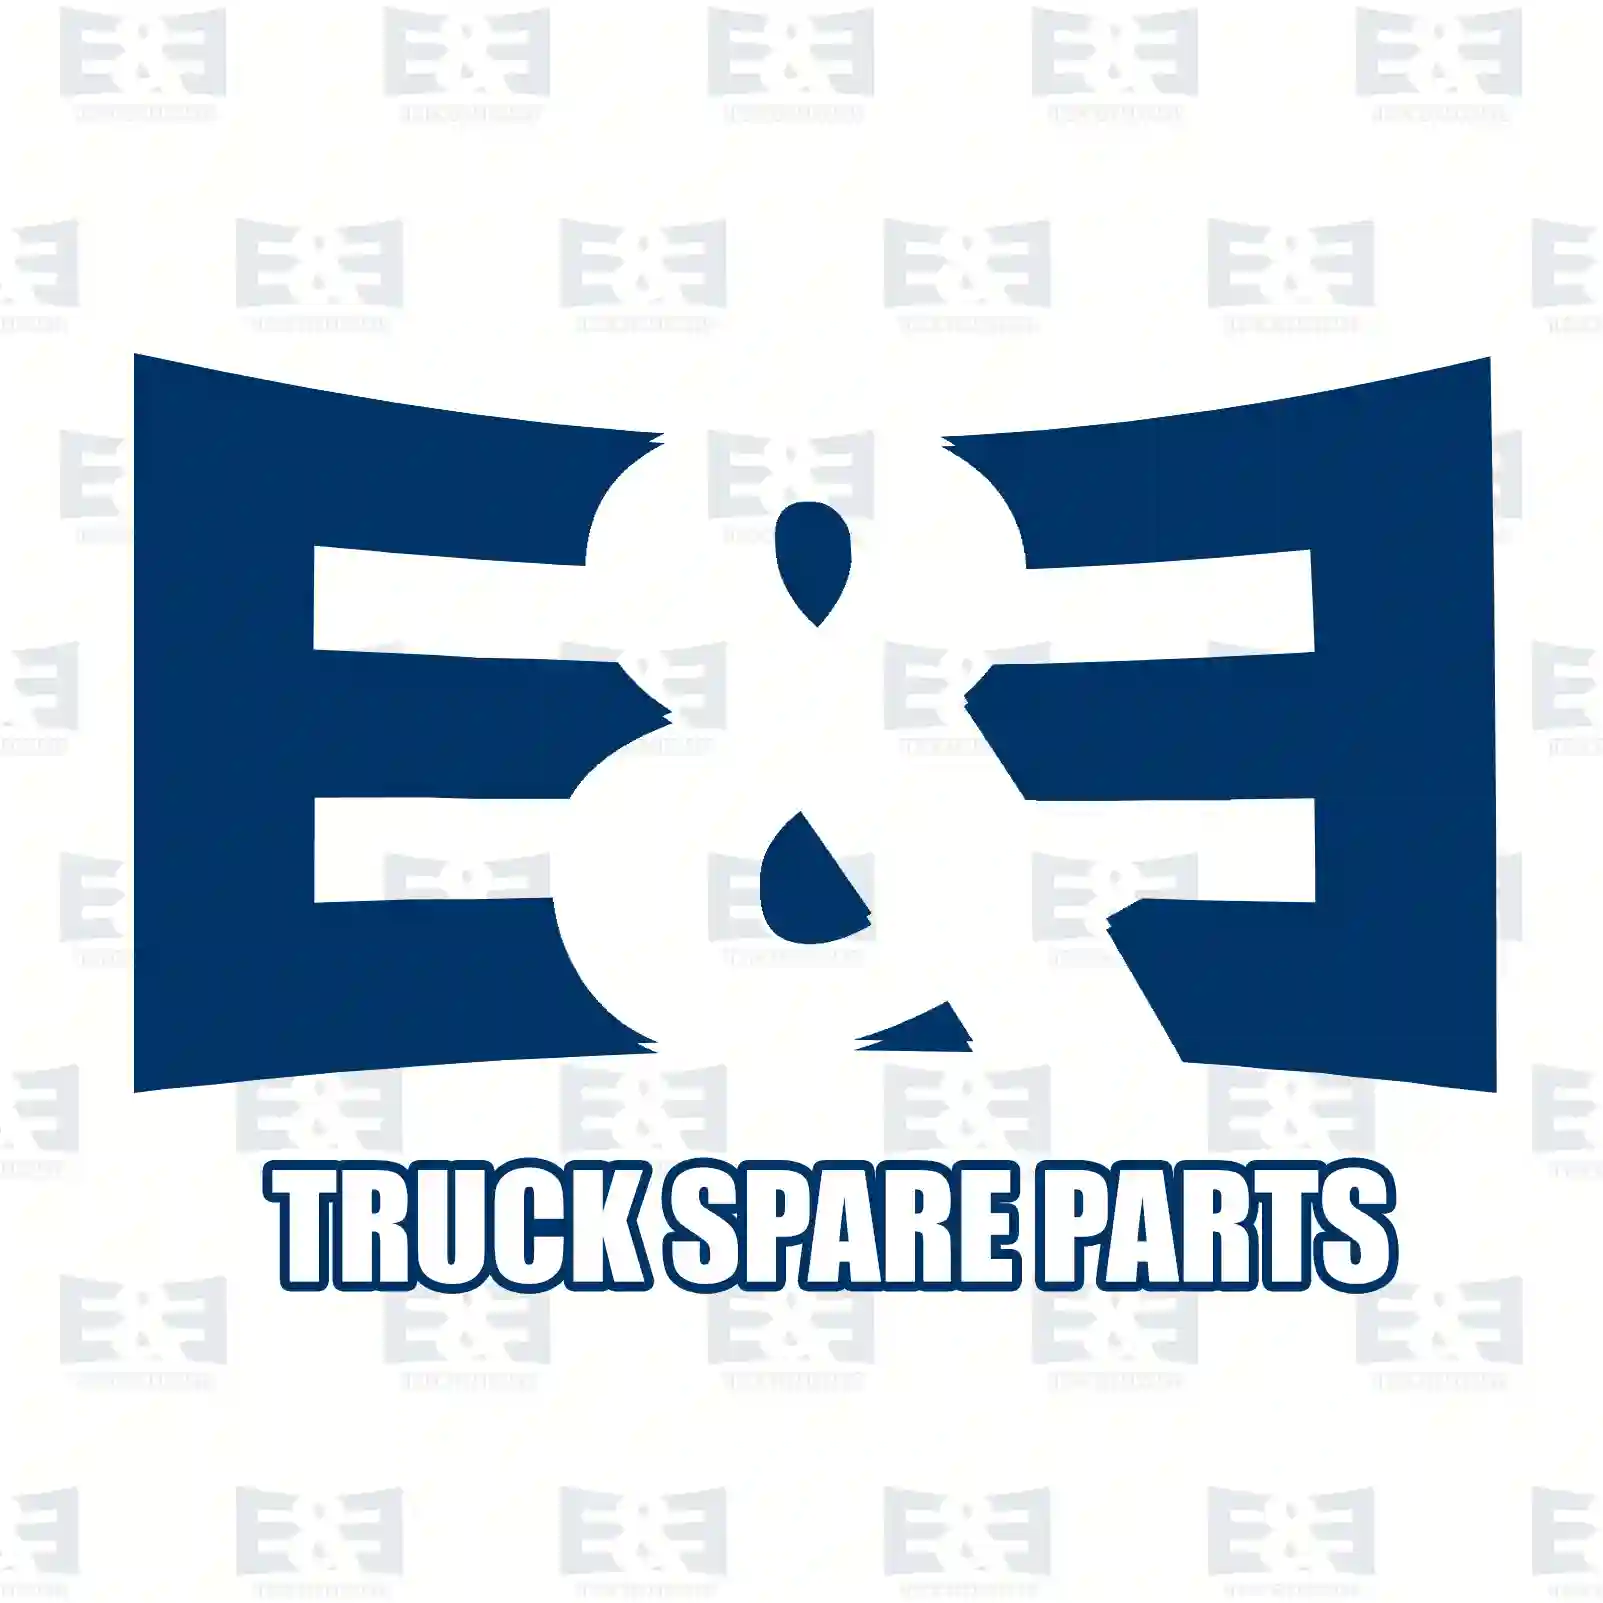 Repair kit, solenoid valve, 2E2281189, 7422327063S, 20584497S, 21008344S, 21162036S, 21206430S, 21710522S, 21965253S, 22327063S ||  2E2281189 E&E Truck Spare Parts | Truck Spare Parts, Auotomotive Spare Parts Repair kit, solenoid valve, 2E2281189, 7422327063S, 20584497S, 21008344S, 21162036S, 21206430S, 21710522S, 21965253S, 22327063S ||  2E2281189 E&E Truck Spare Parts | Truck Spare Parts, Auotomotive Spare Parts